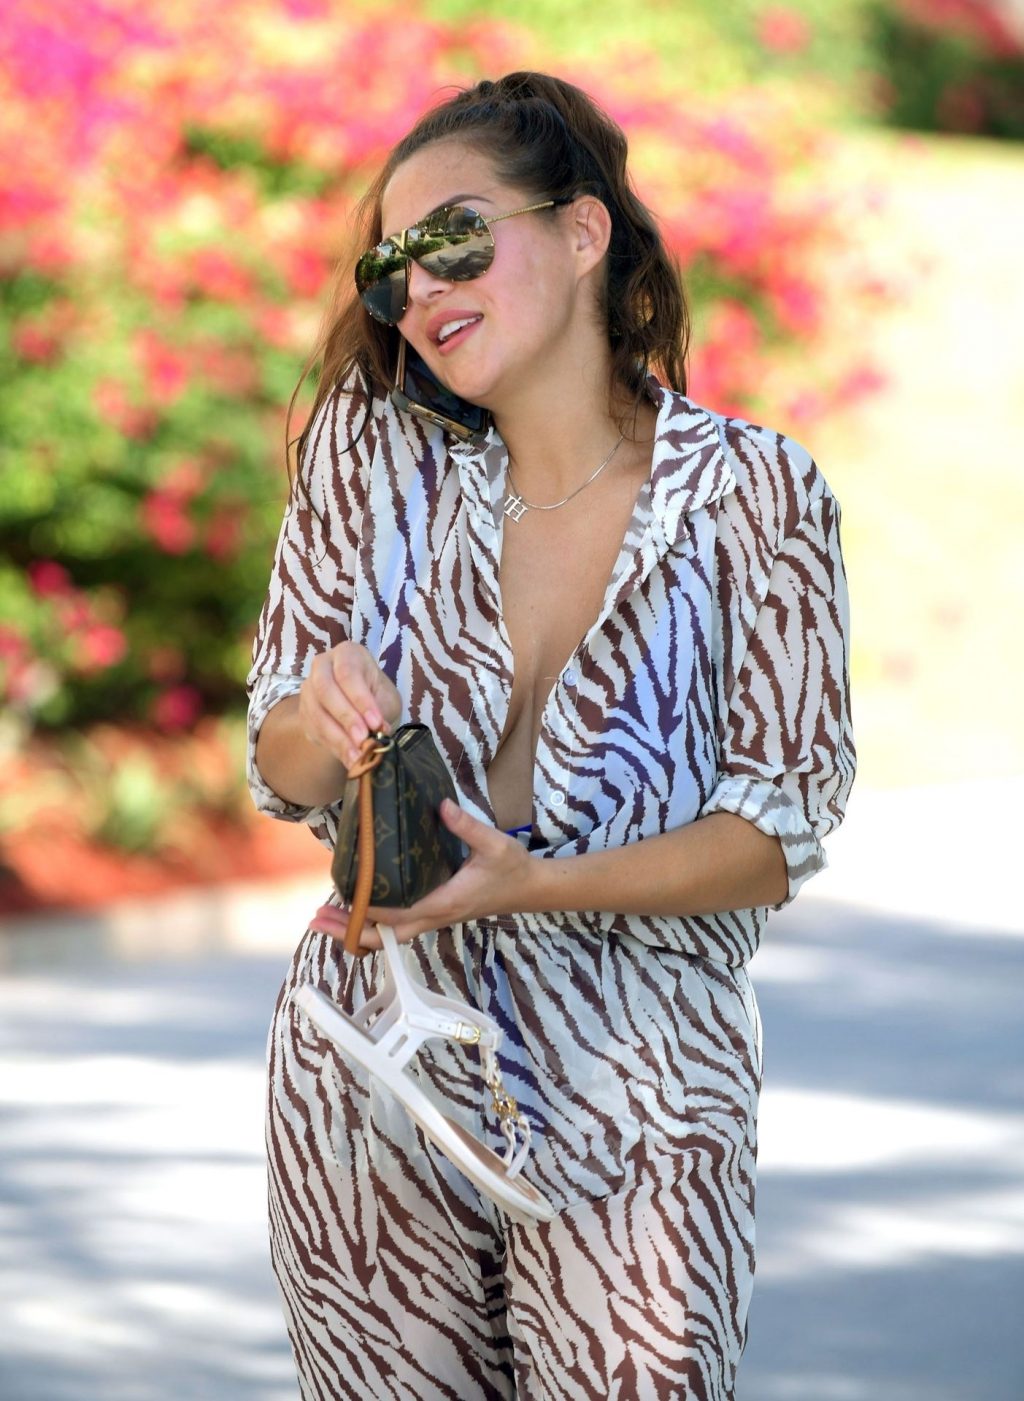 Chloe Goodman Wears a Zebra Print Jumpsuit Out on Holiday in Dubai (35 Photos)